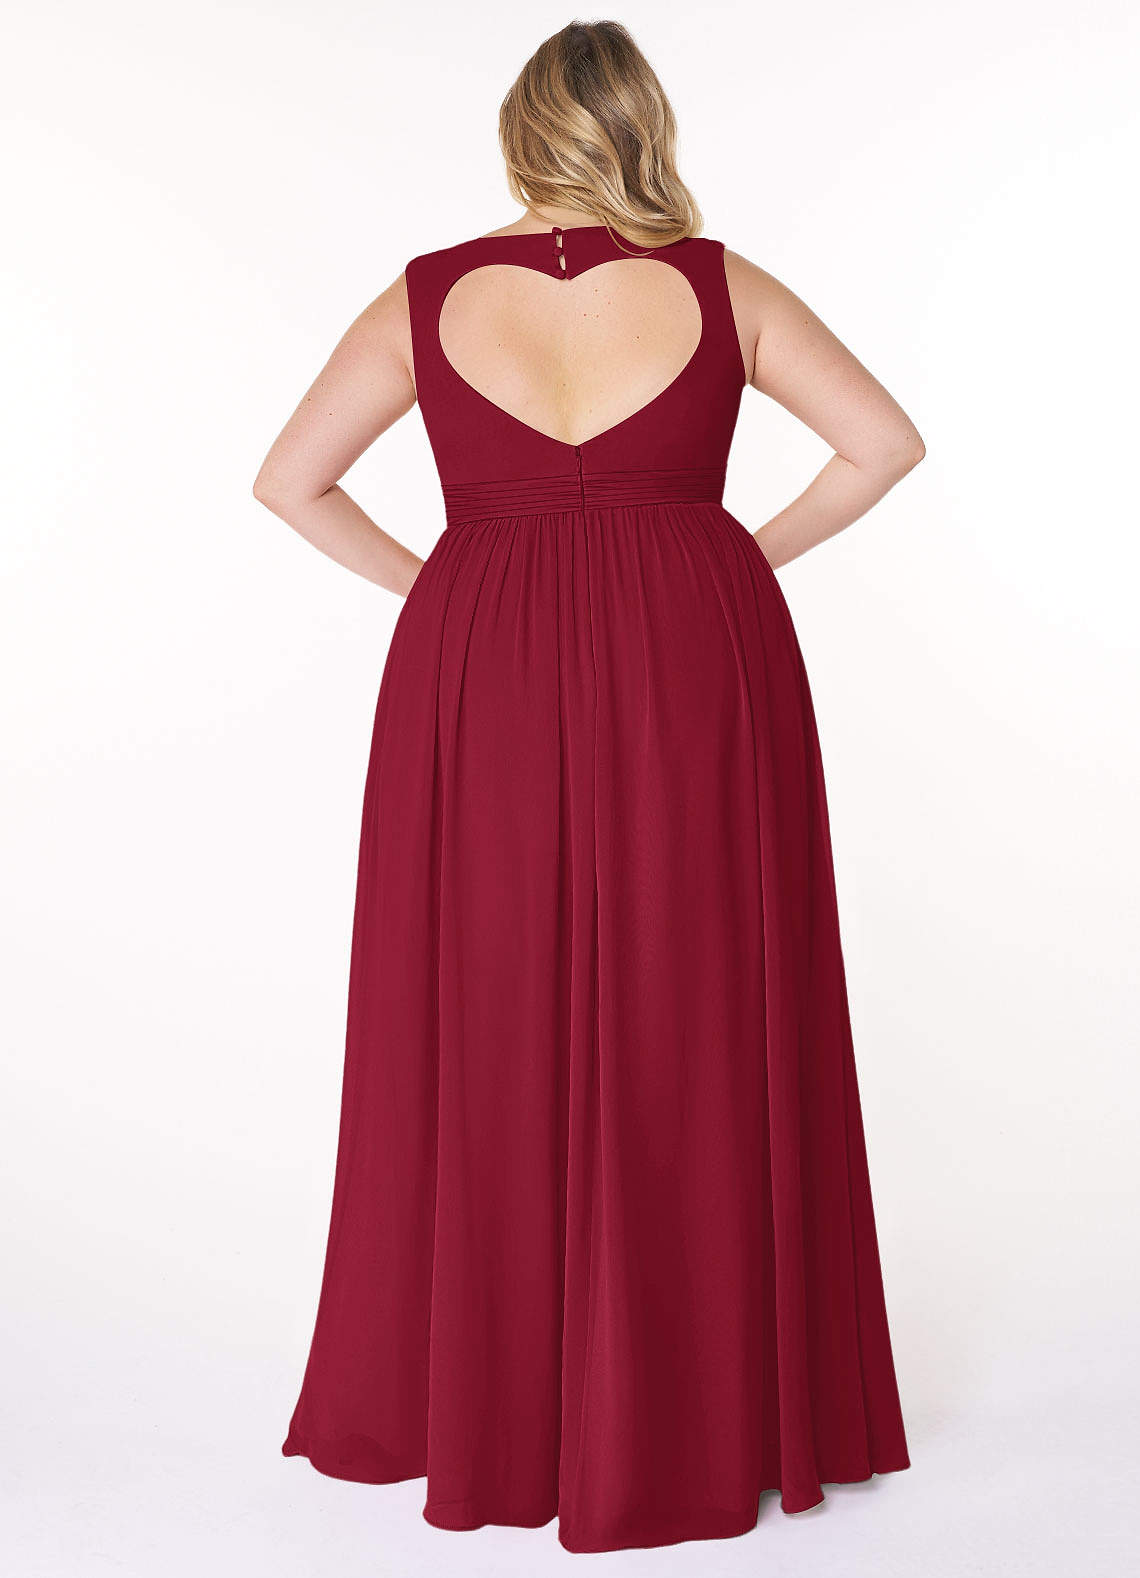 Azazie Raine Bridesmaid Dresses A-Line Sweetheart Ruched Chiffon Floor-Length Dress image1